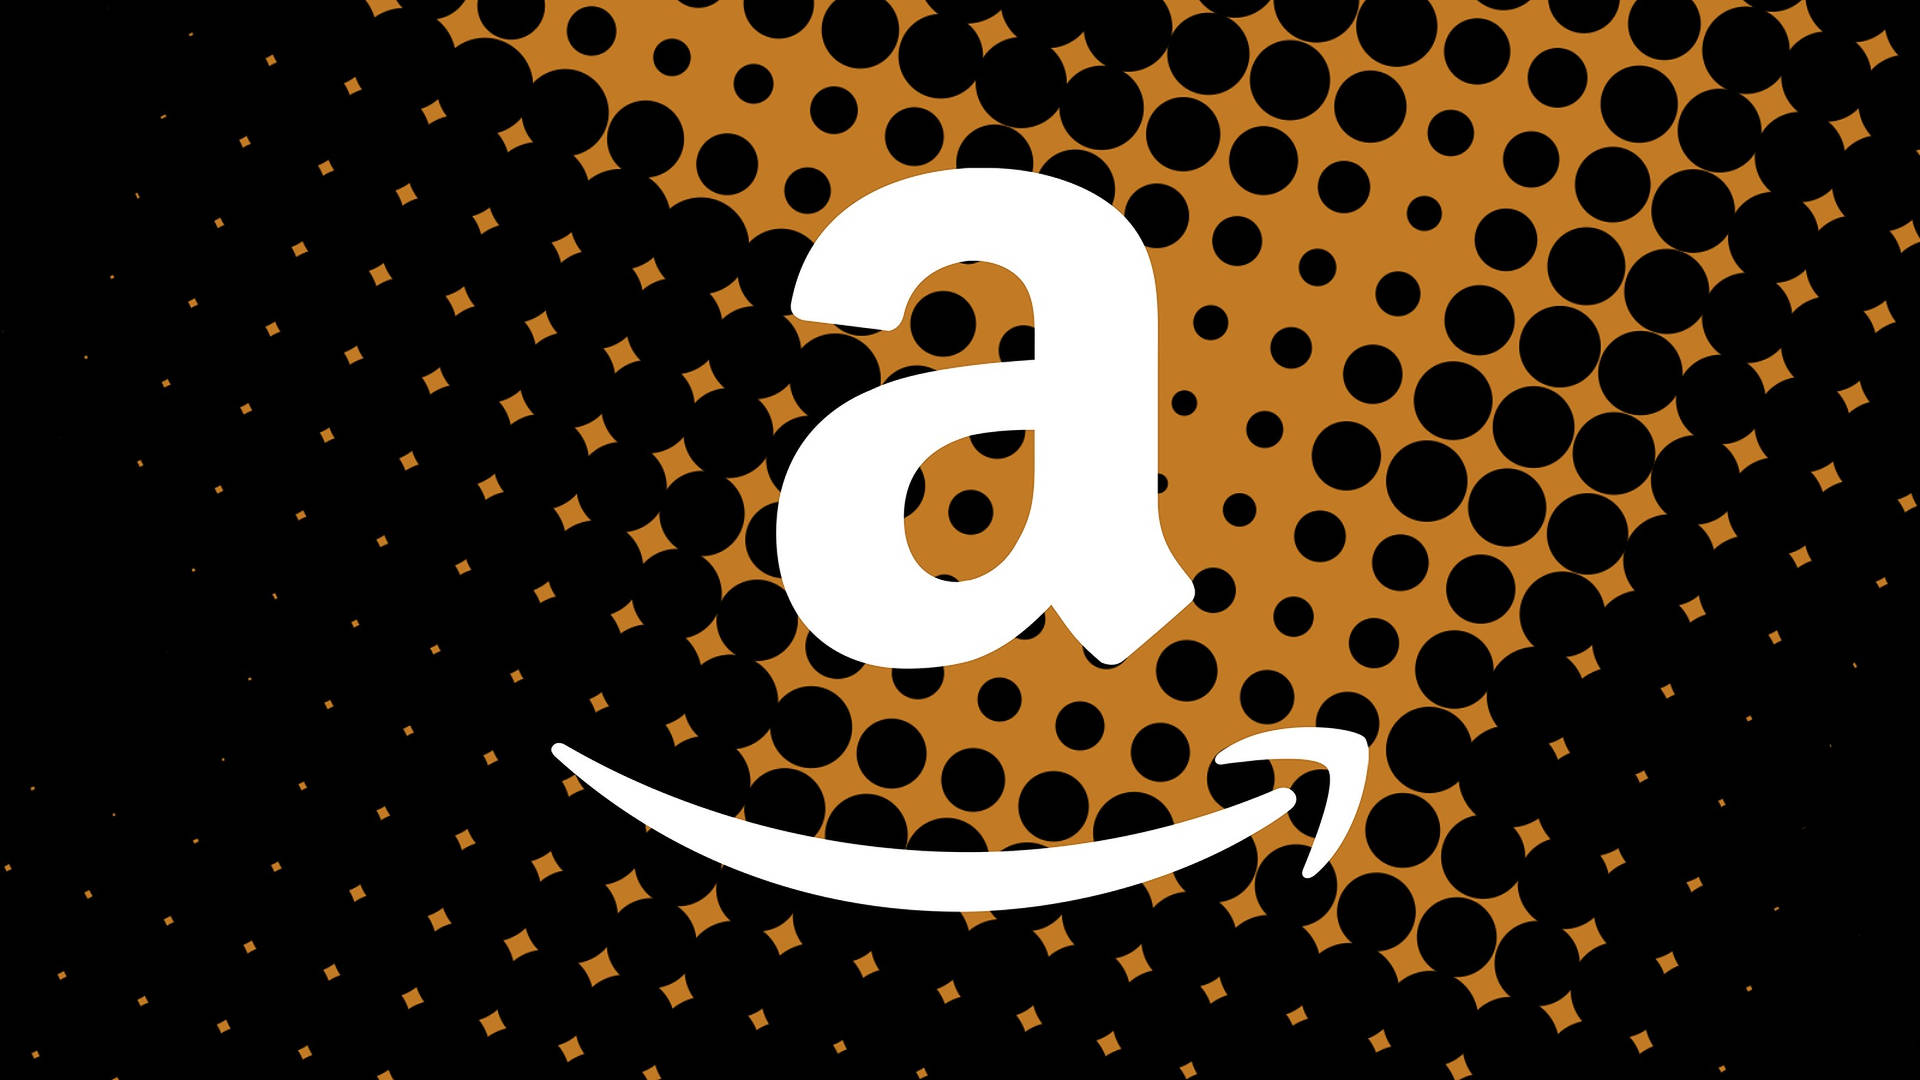 Amazon And Dots Wallpaper